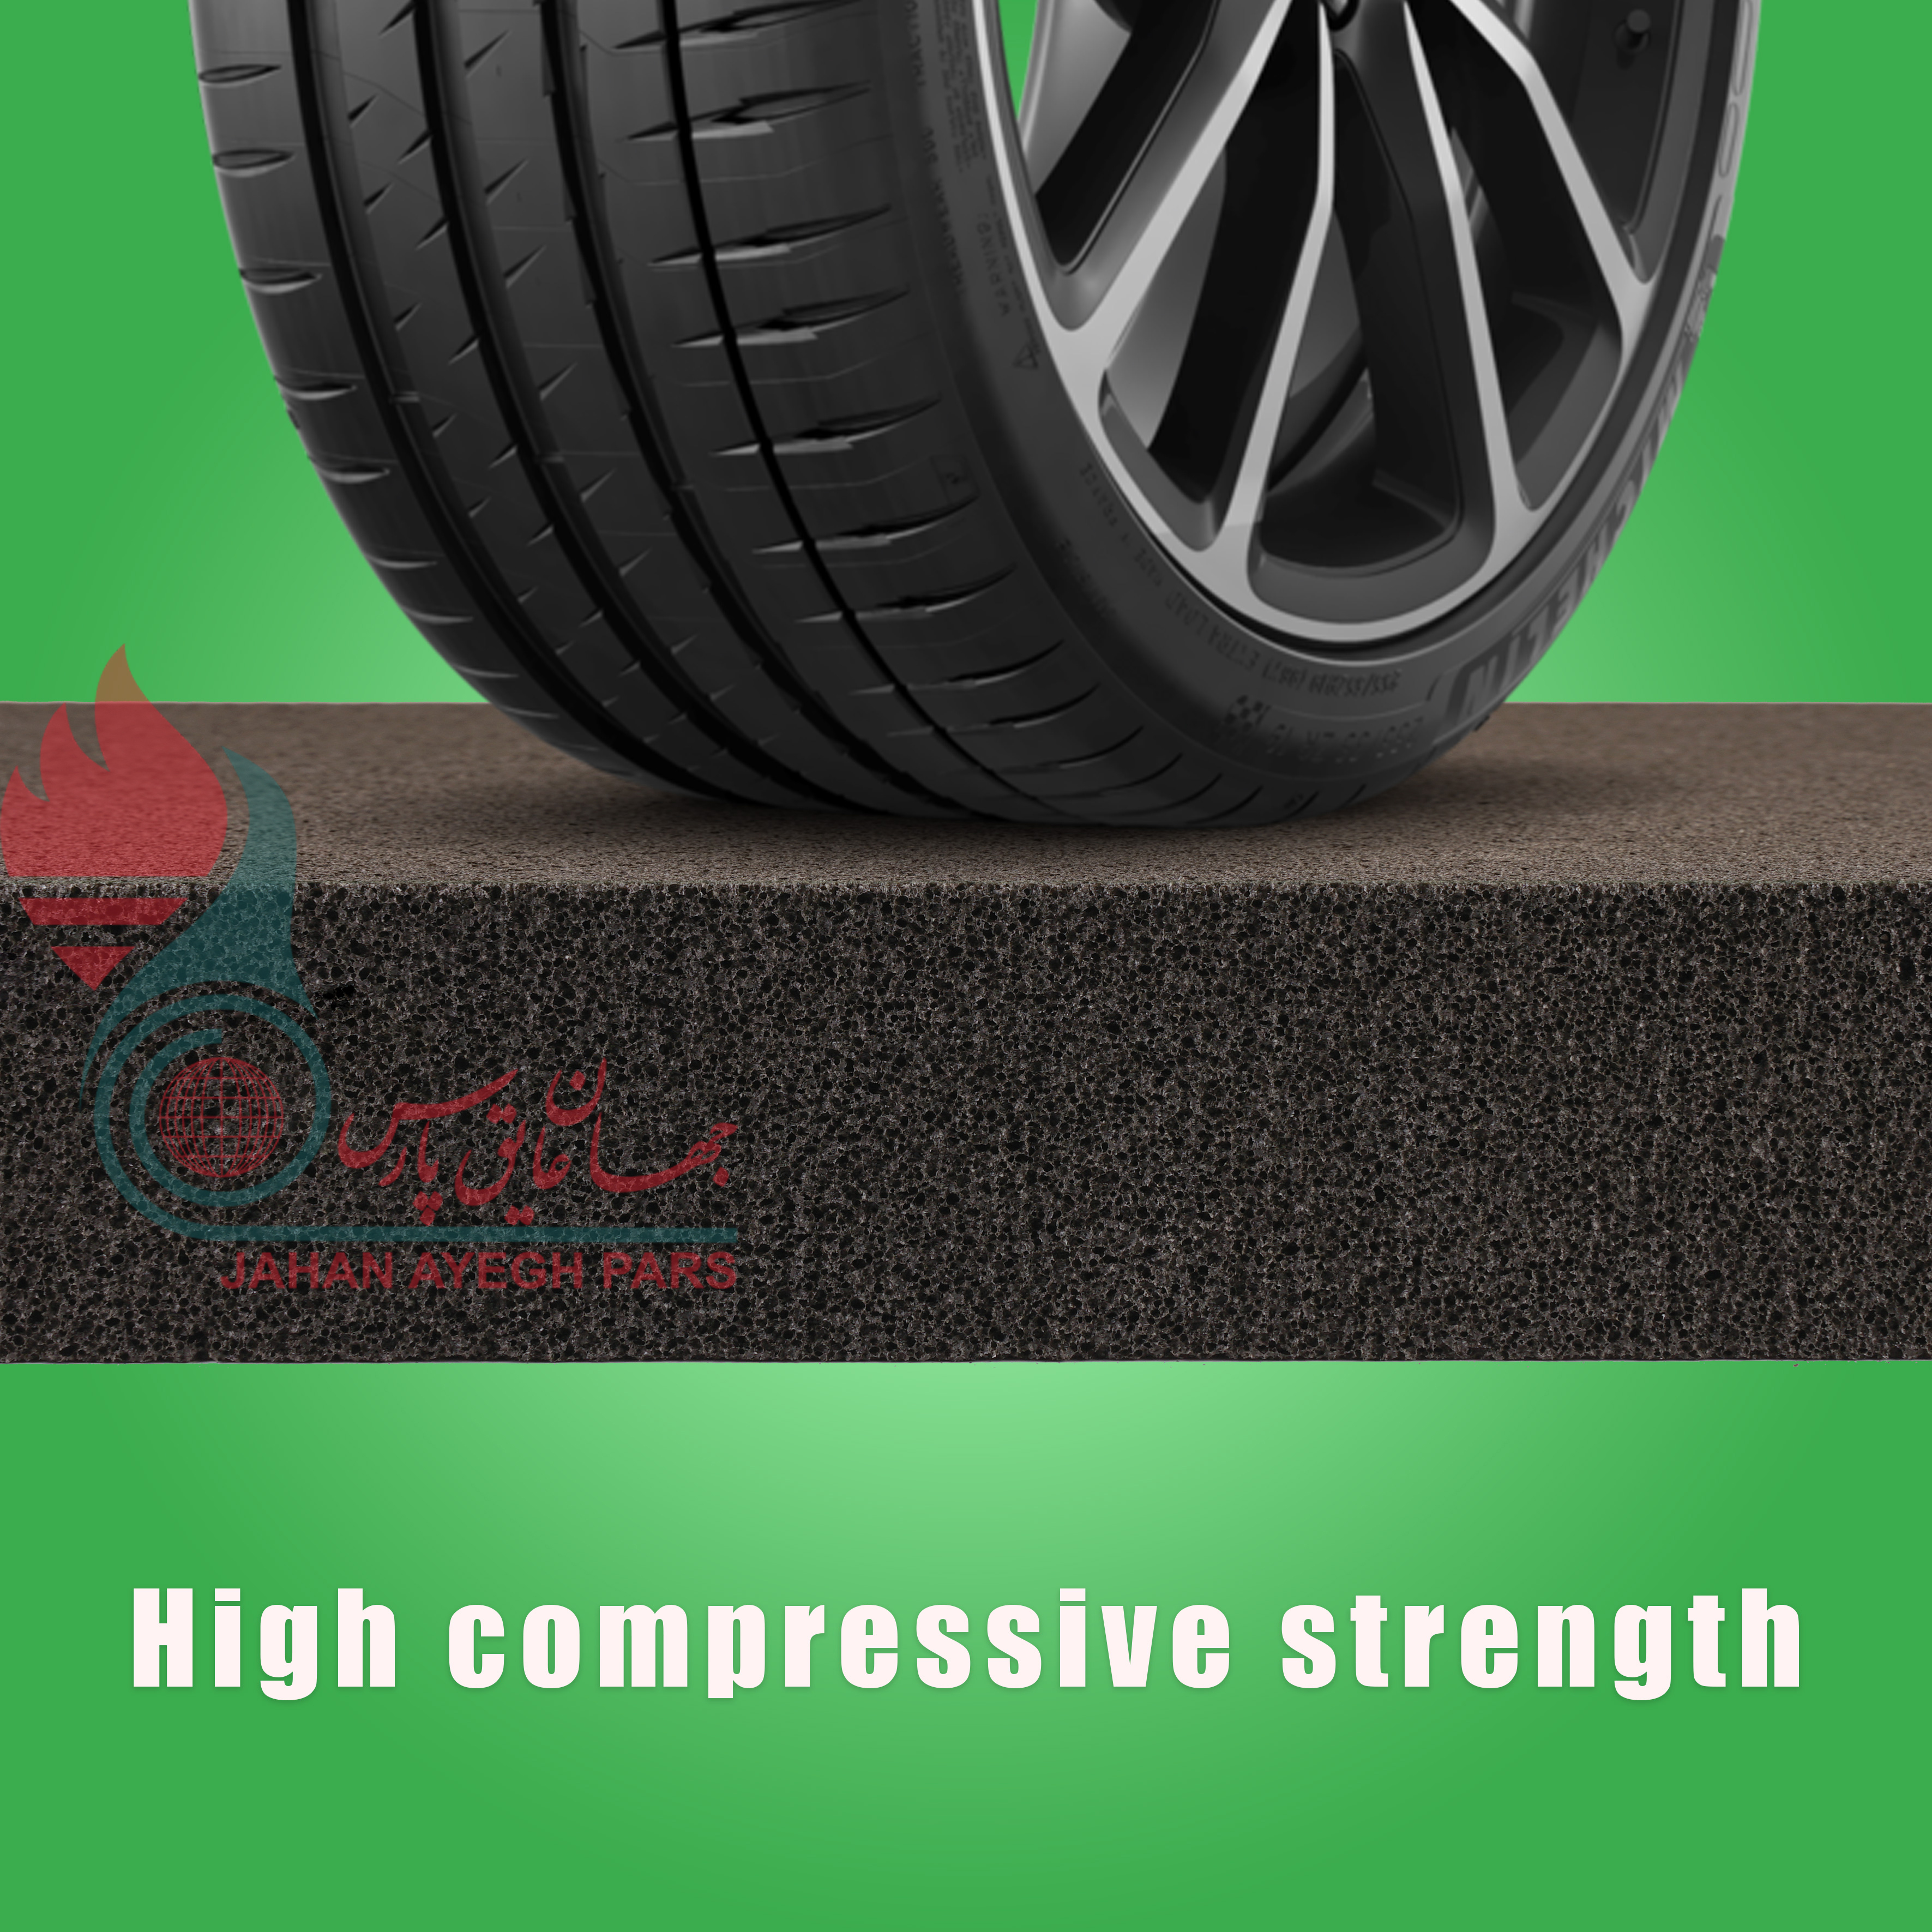 High compressive strength